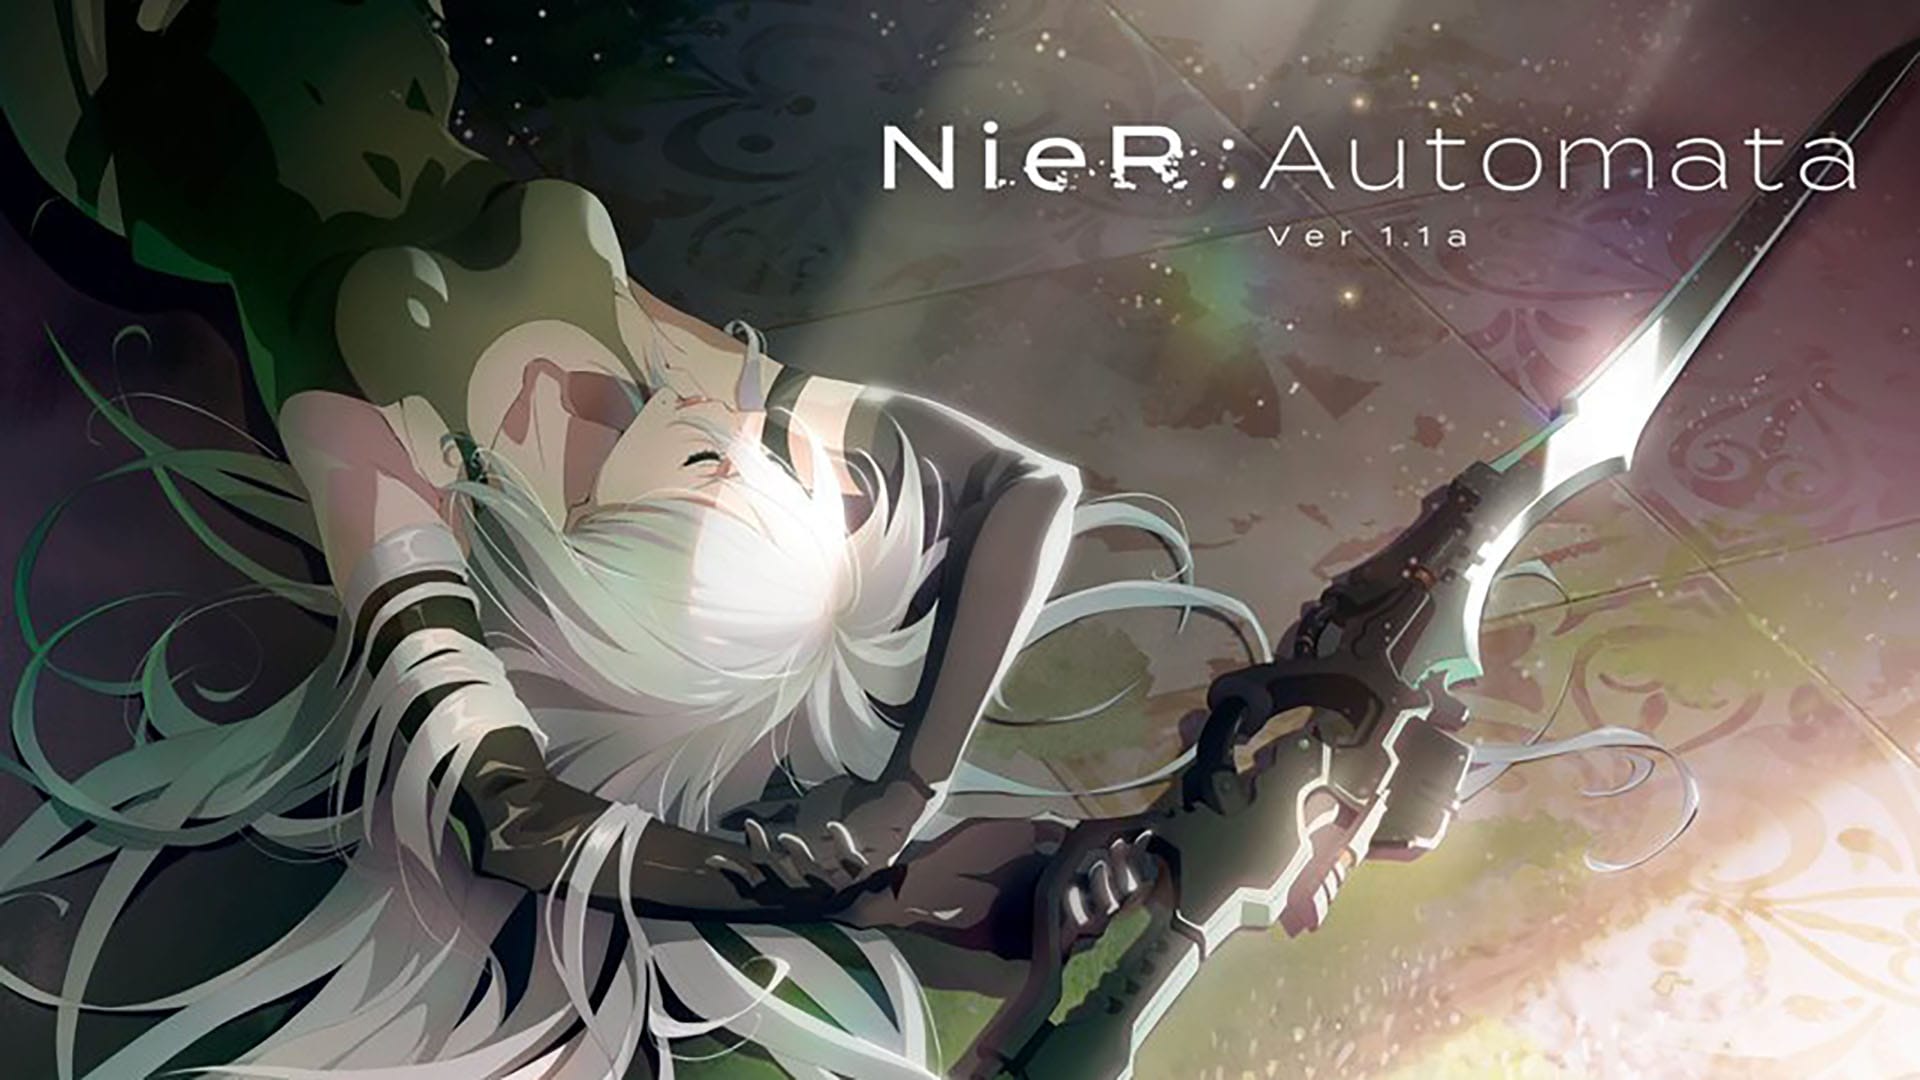 NieR:Automata Ver 1.1a (TV) - Anime News Network